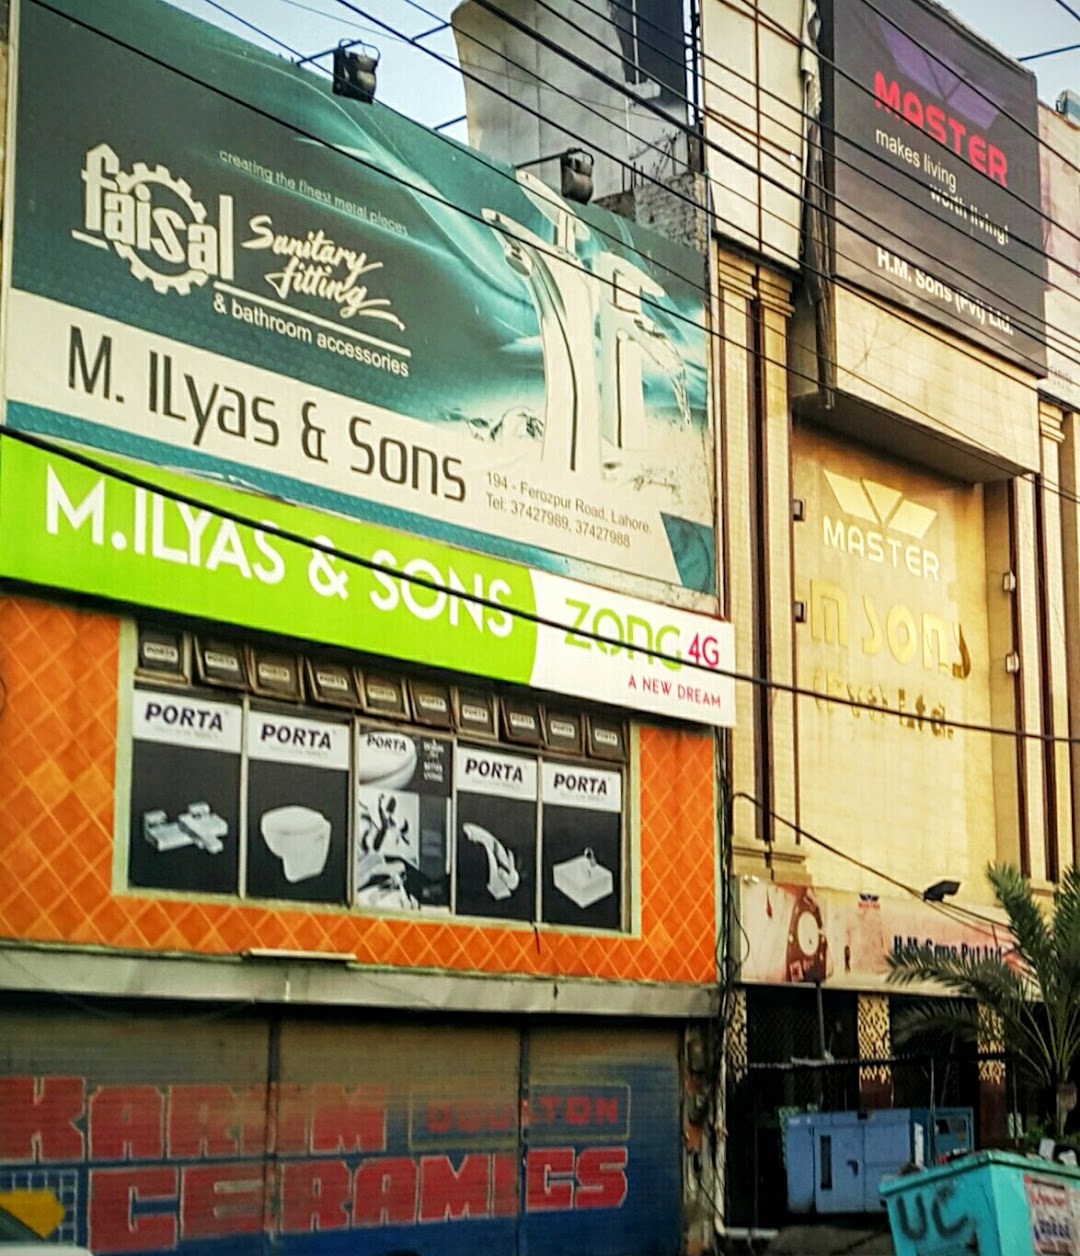 M Ilyas & Sons